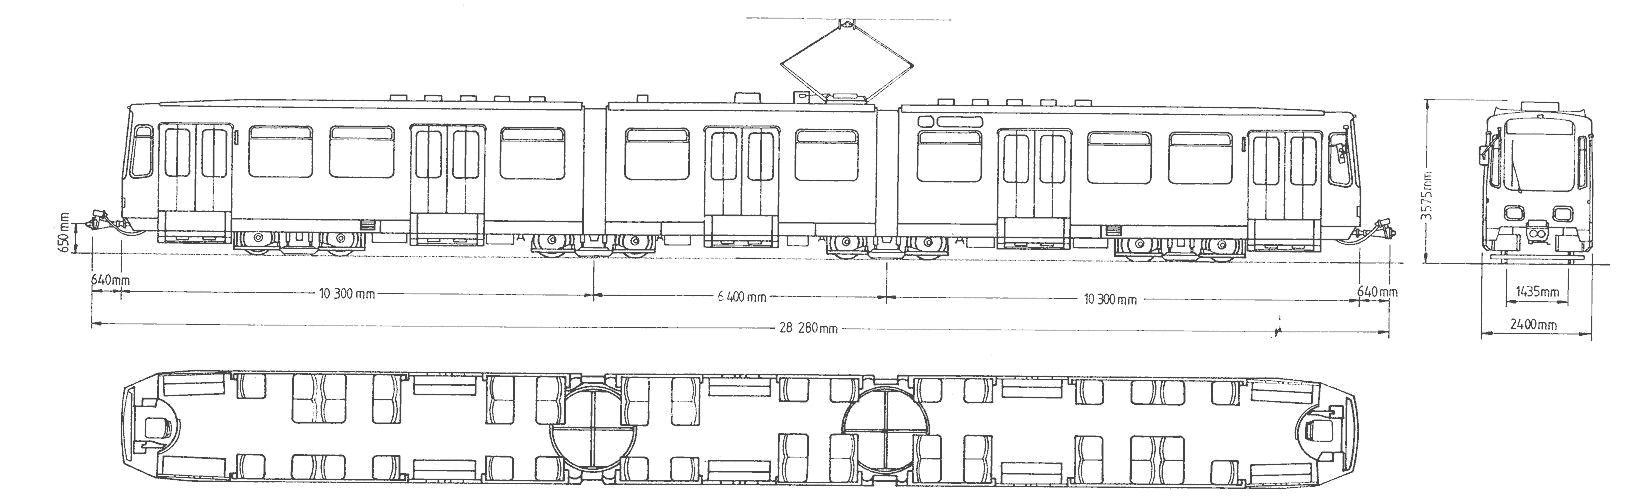 Схема трамвая TW 6000